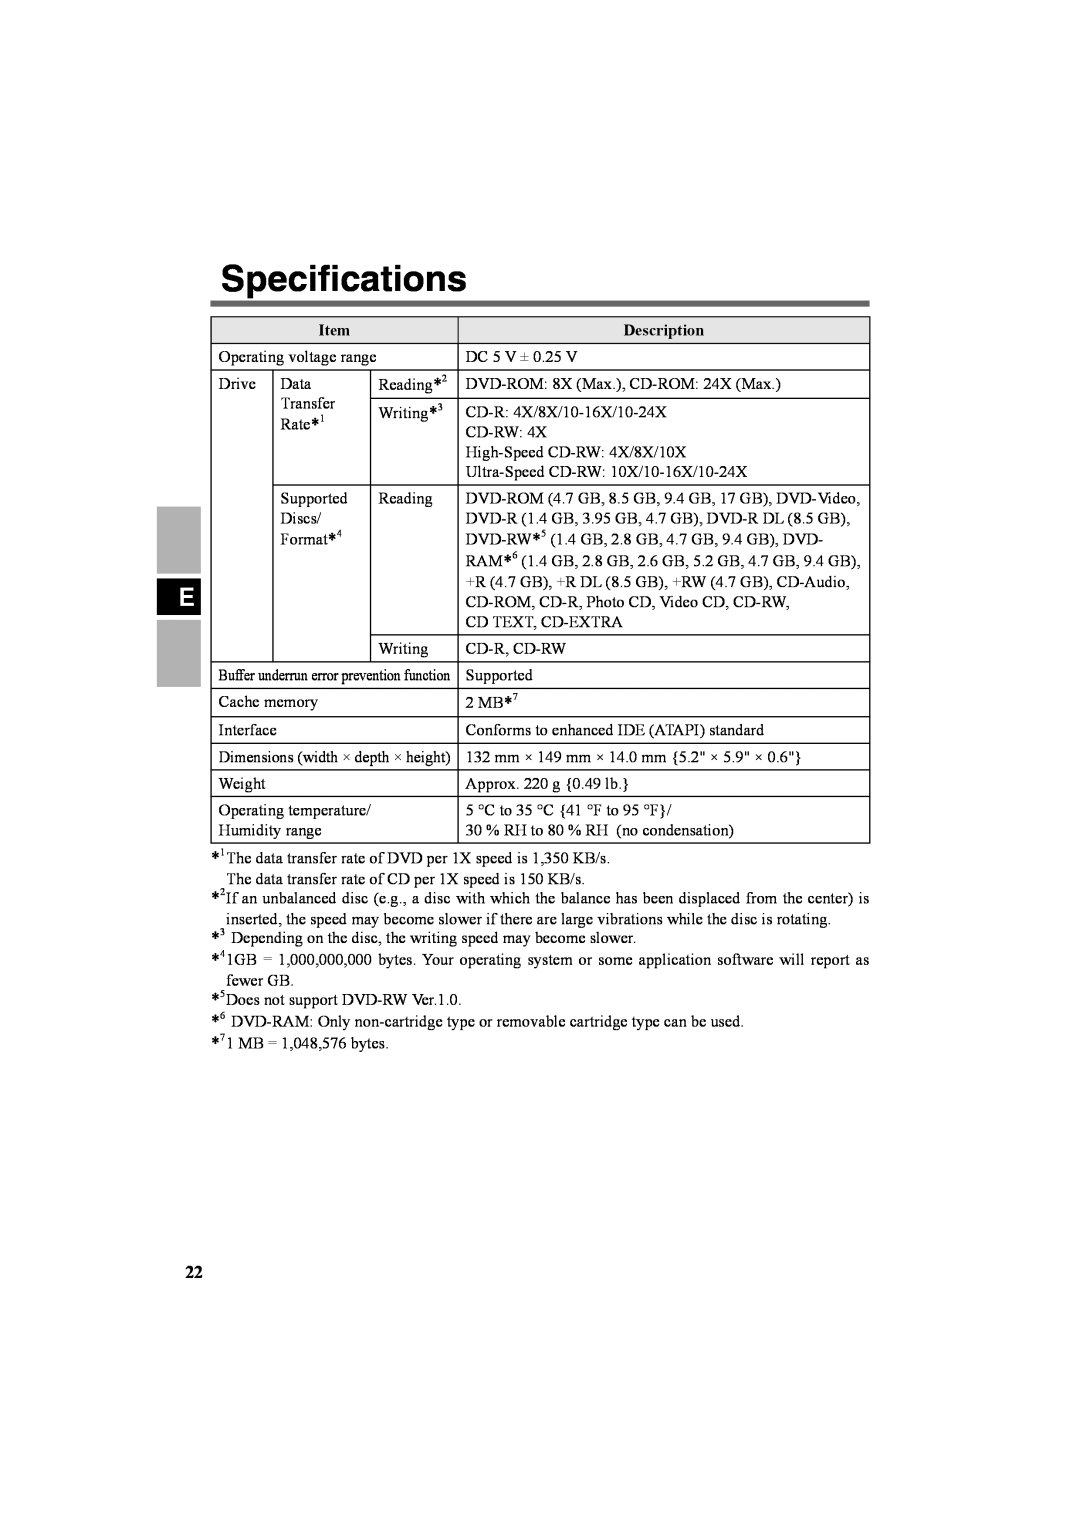 Panasonic CF-VDR301U specifications Speciﬁcations, Description 